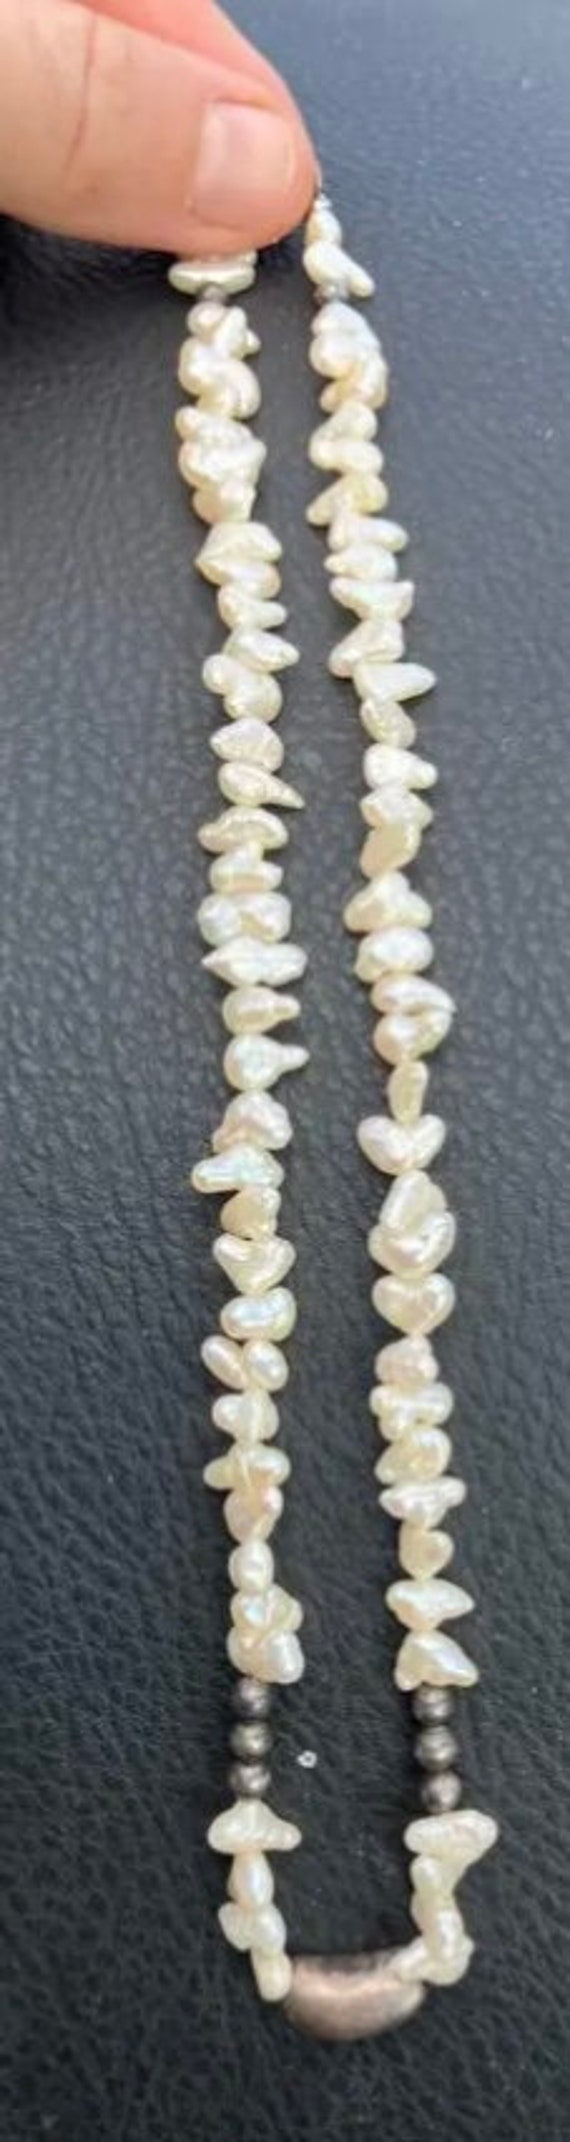 Genuine white baroque pearl choker necklace